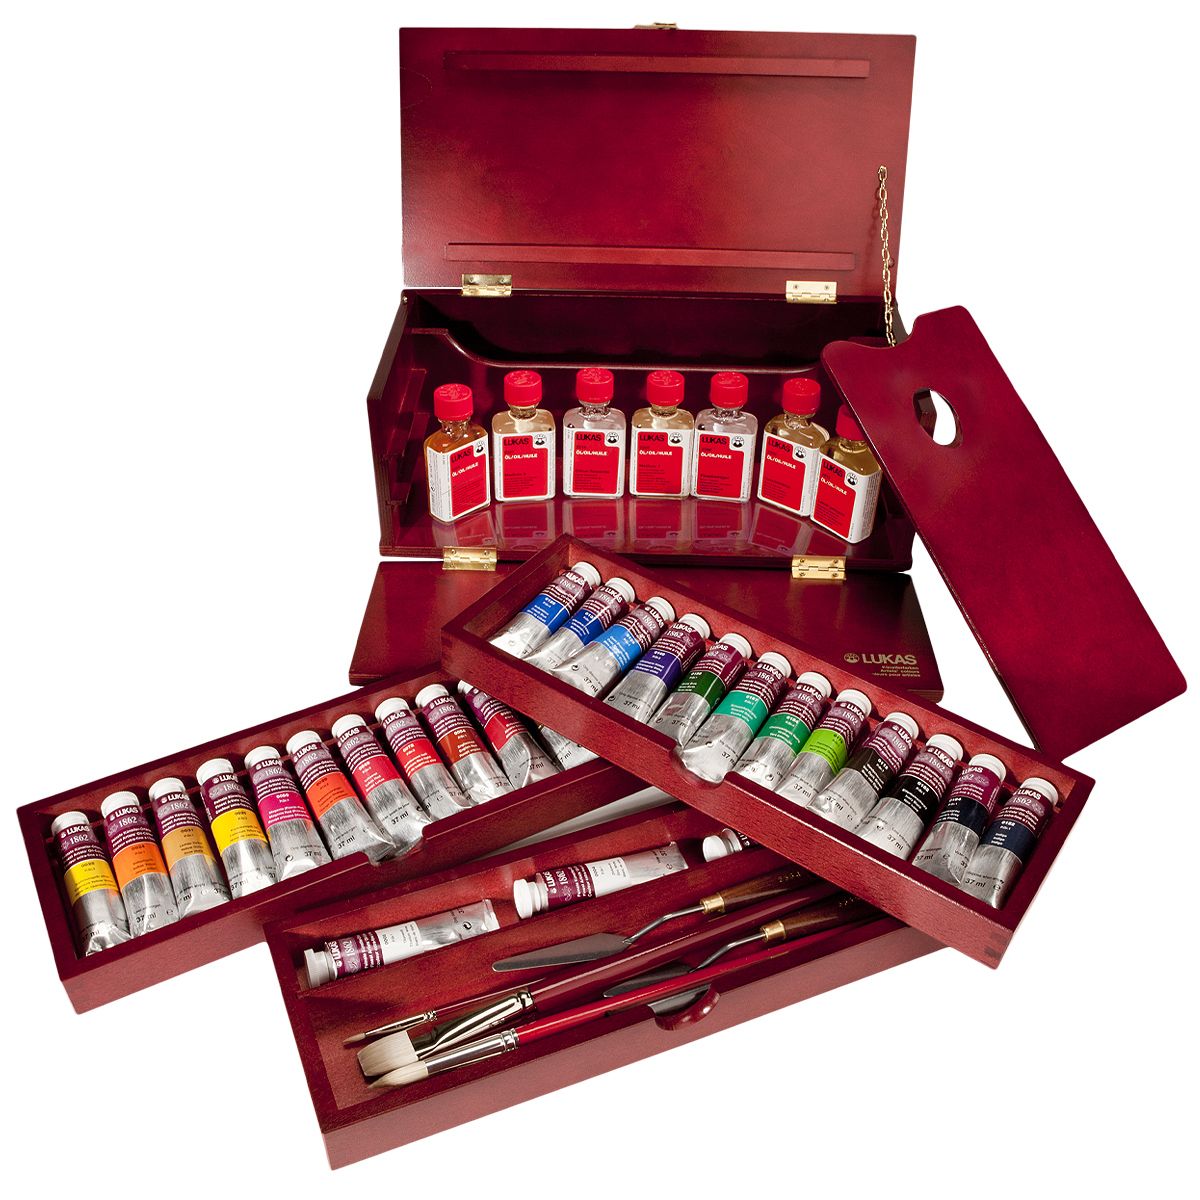 https://www.jerrysartarama.com/media/catalog/product/cache/ecb49a32eeb5603594b082bd5fe65733/l/u/lukas-1862-oil-colors-finest-deluxe-wood-box-set-open-59785.jpg